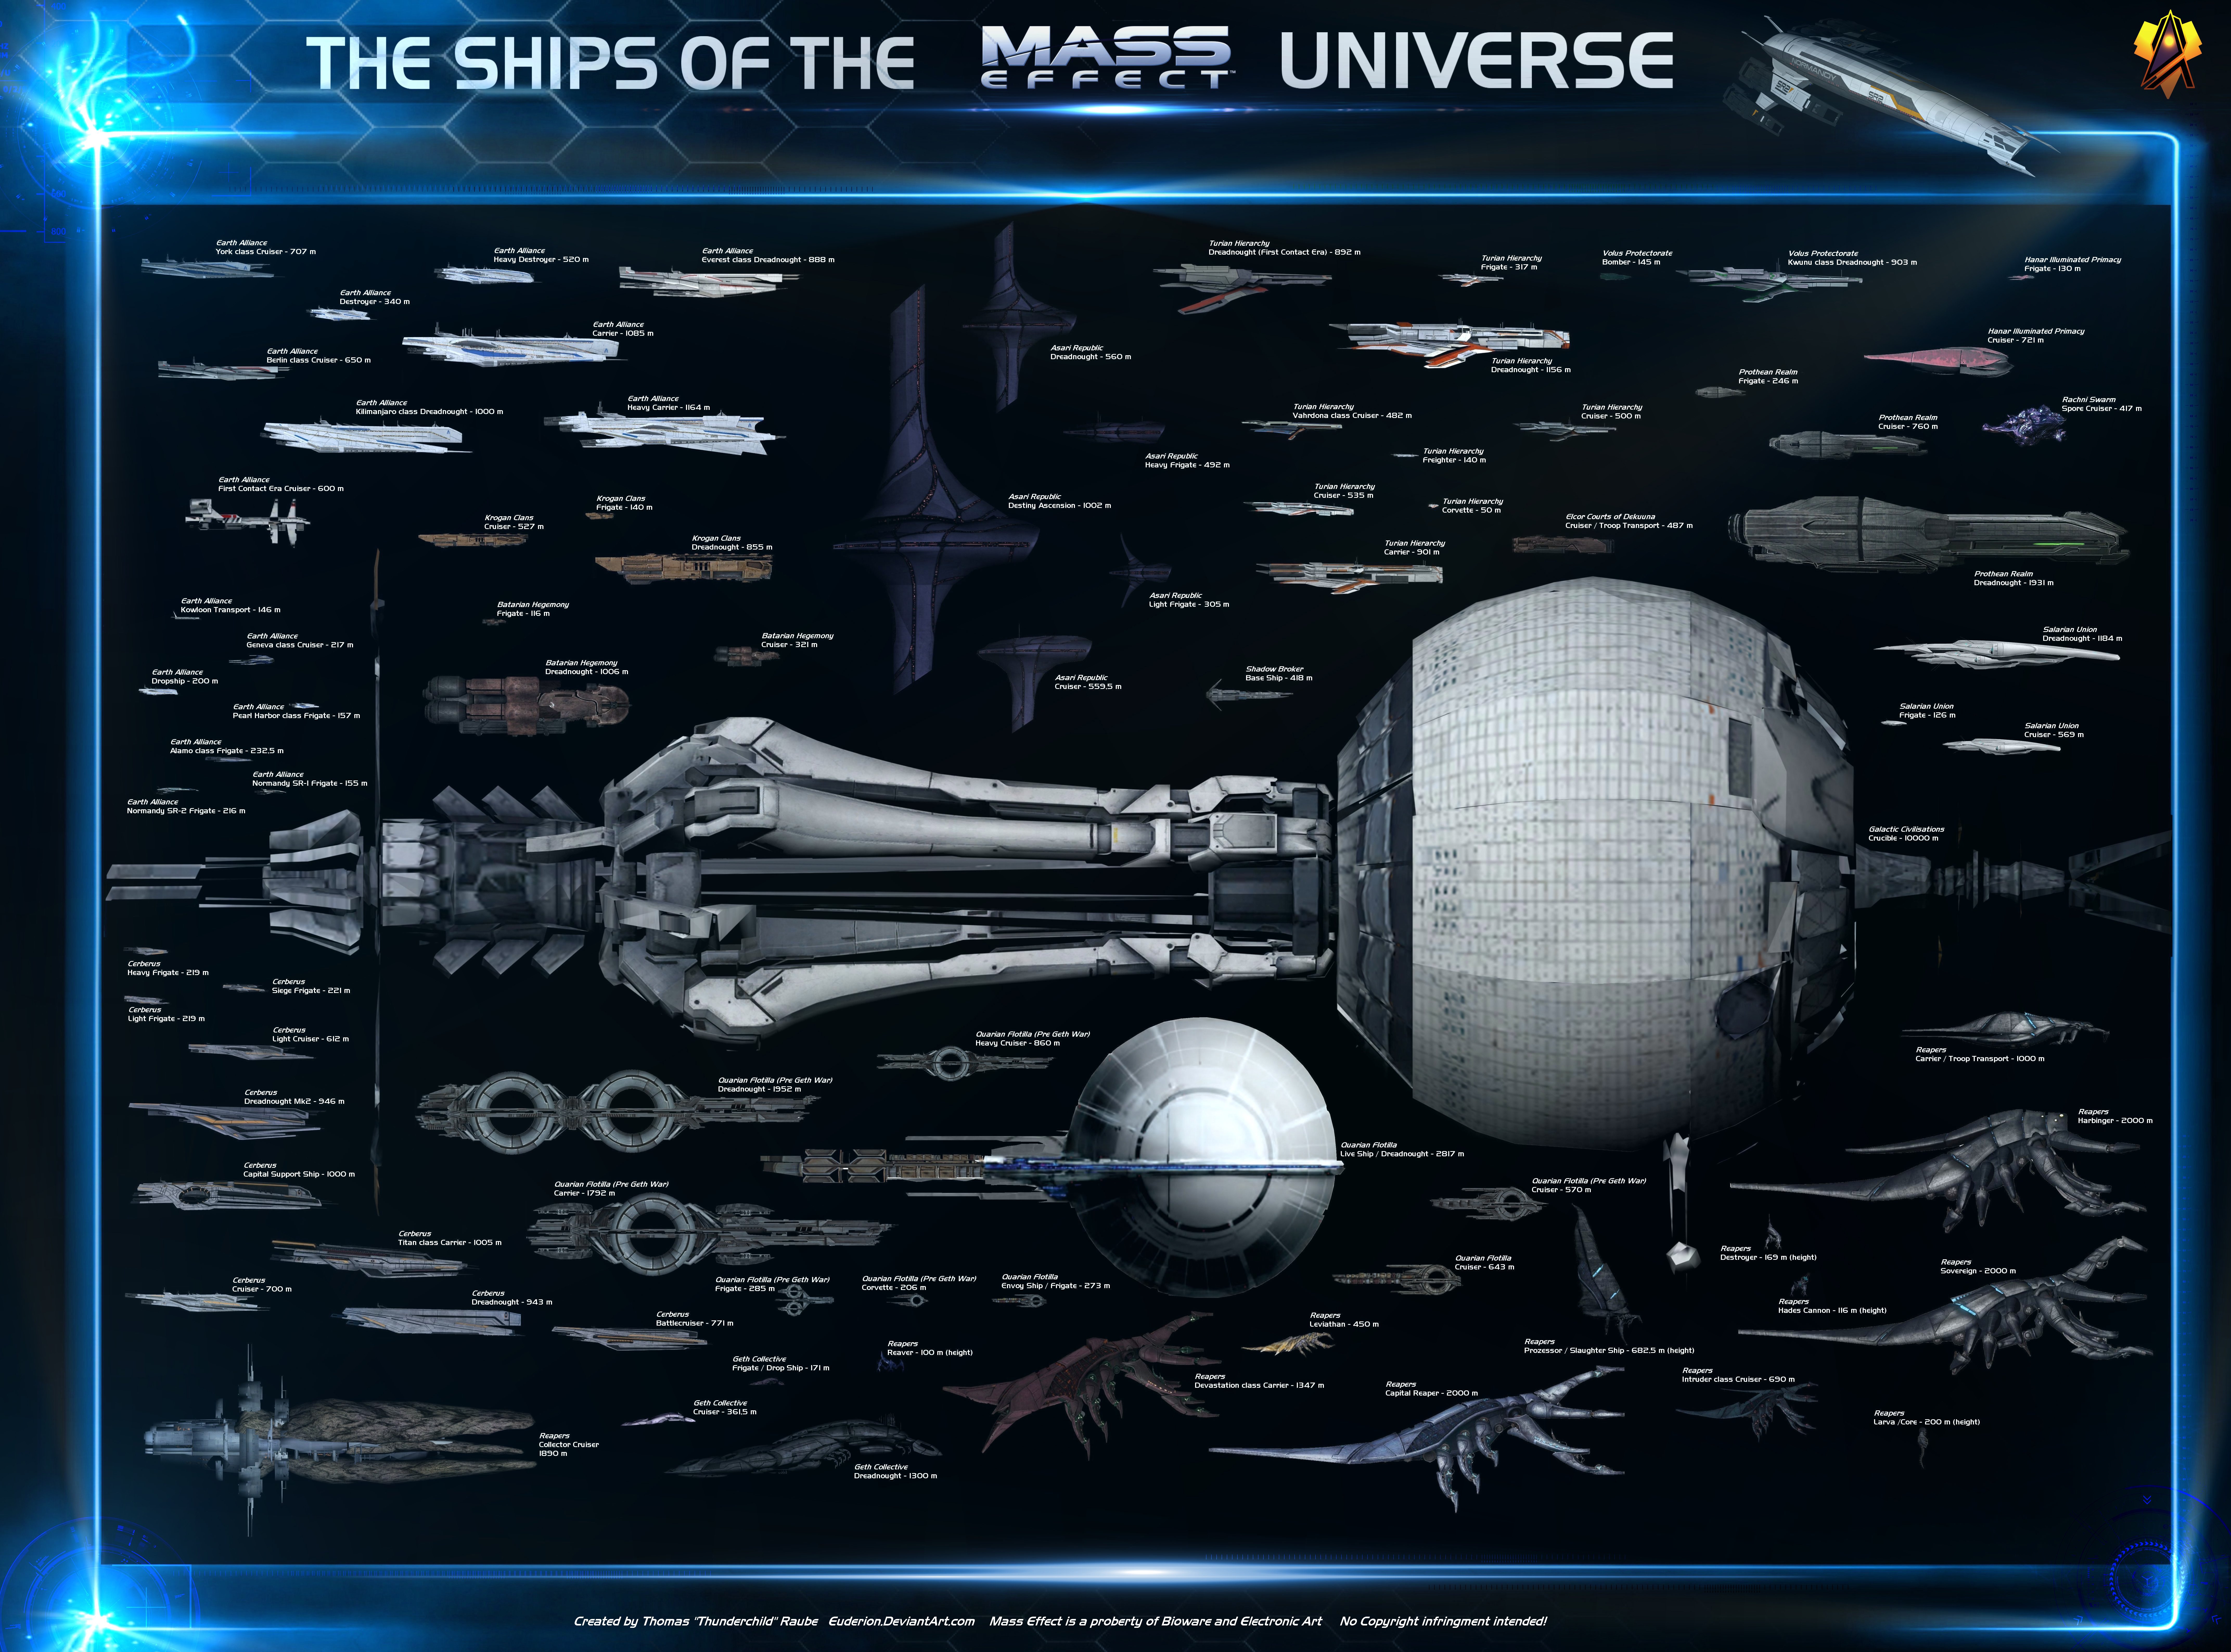 Ultimate Mass Effect Starship Size Comparison